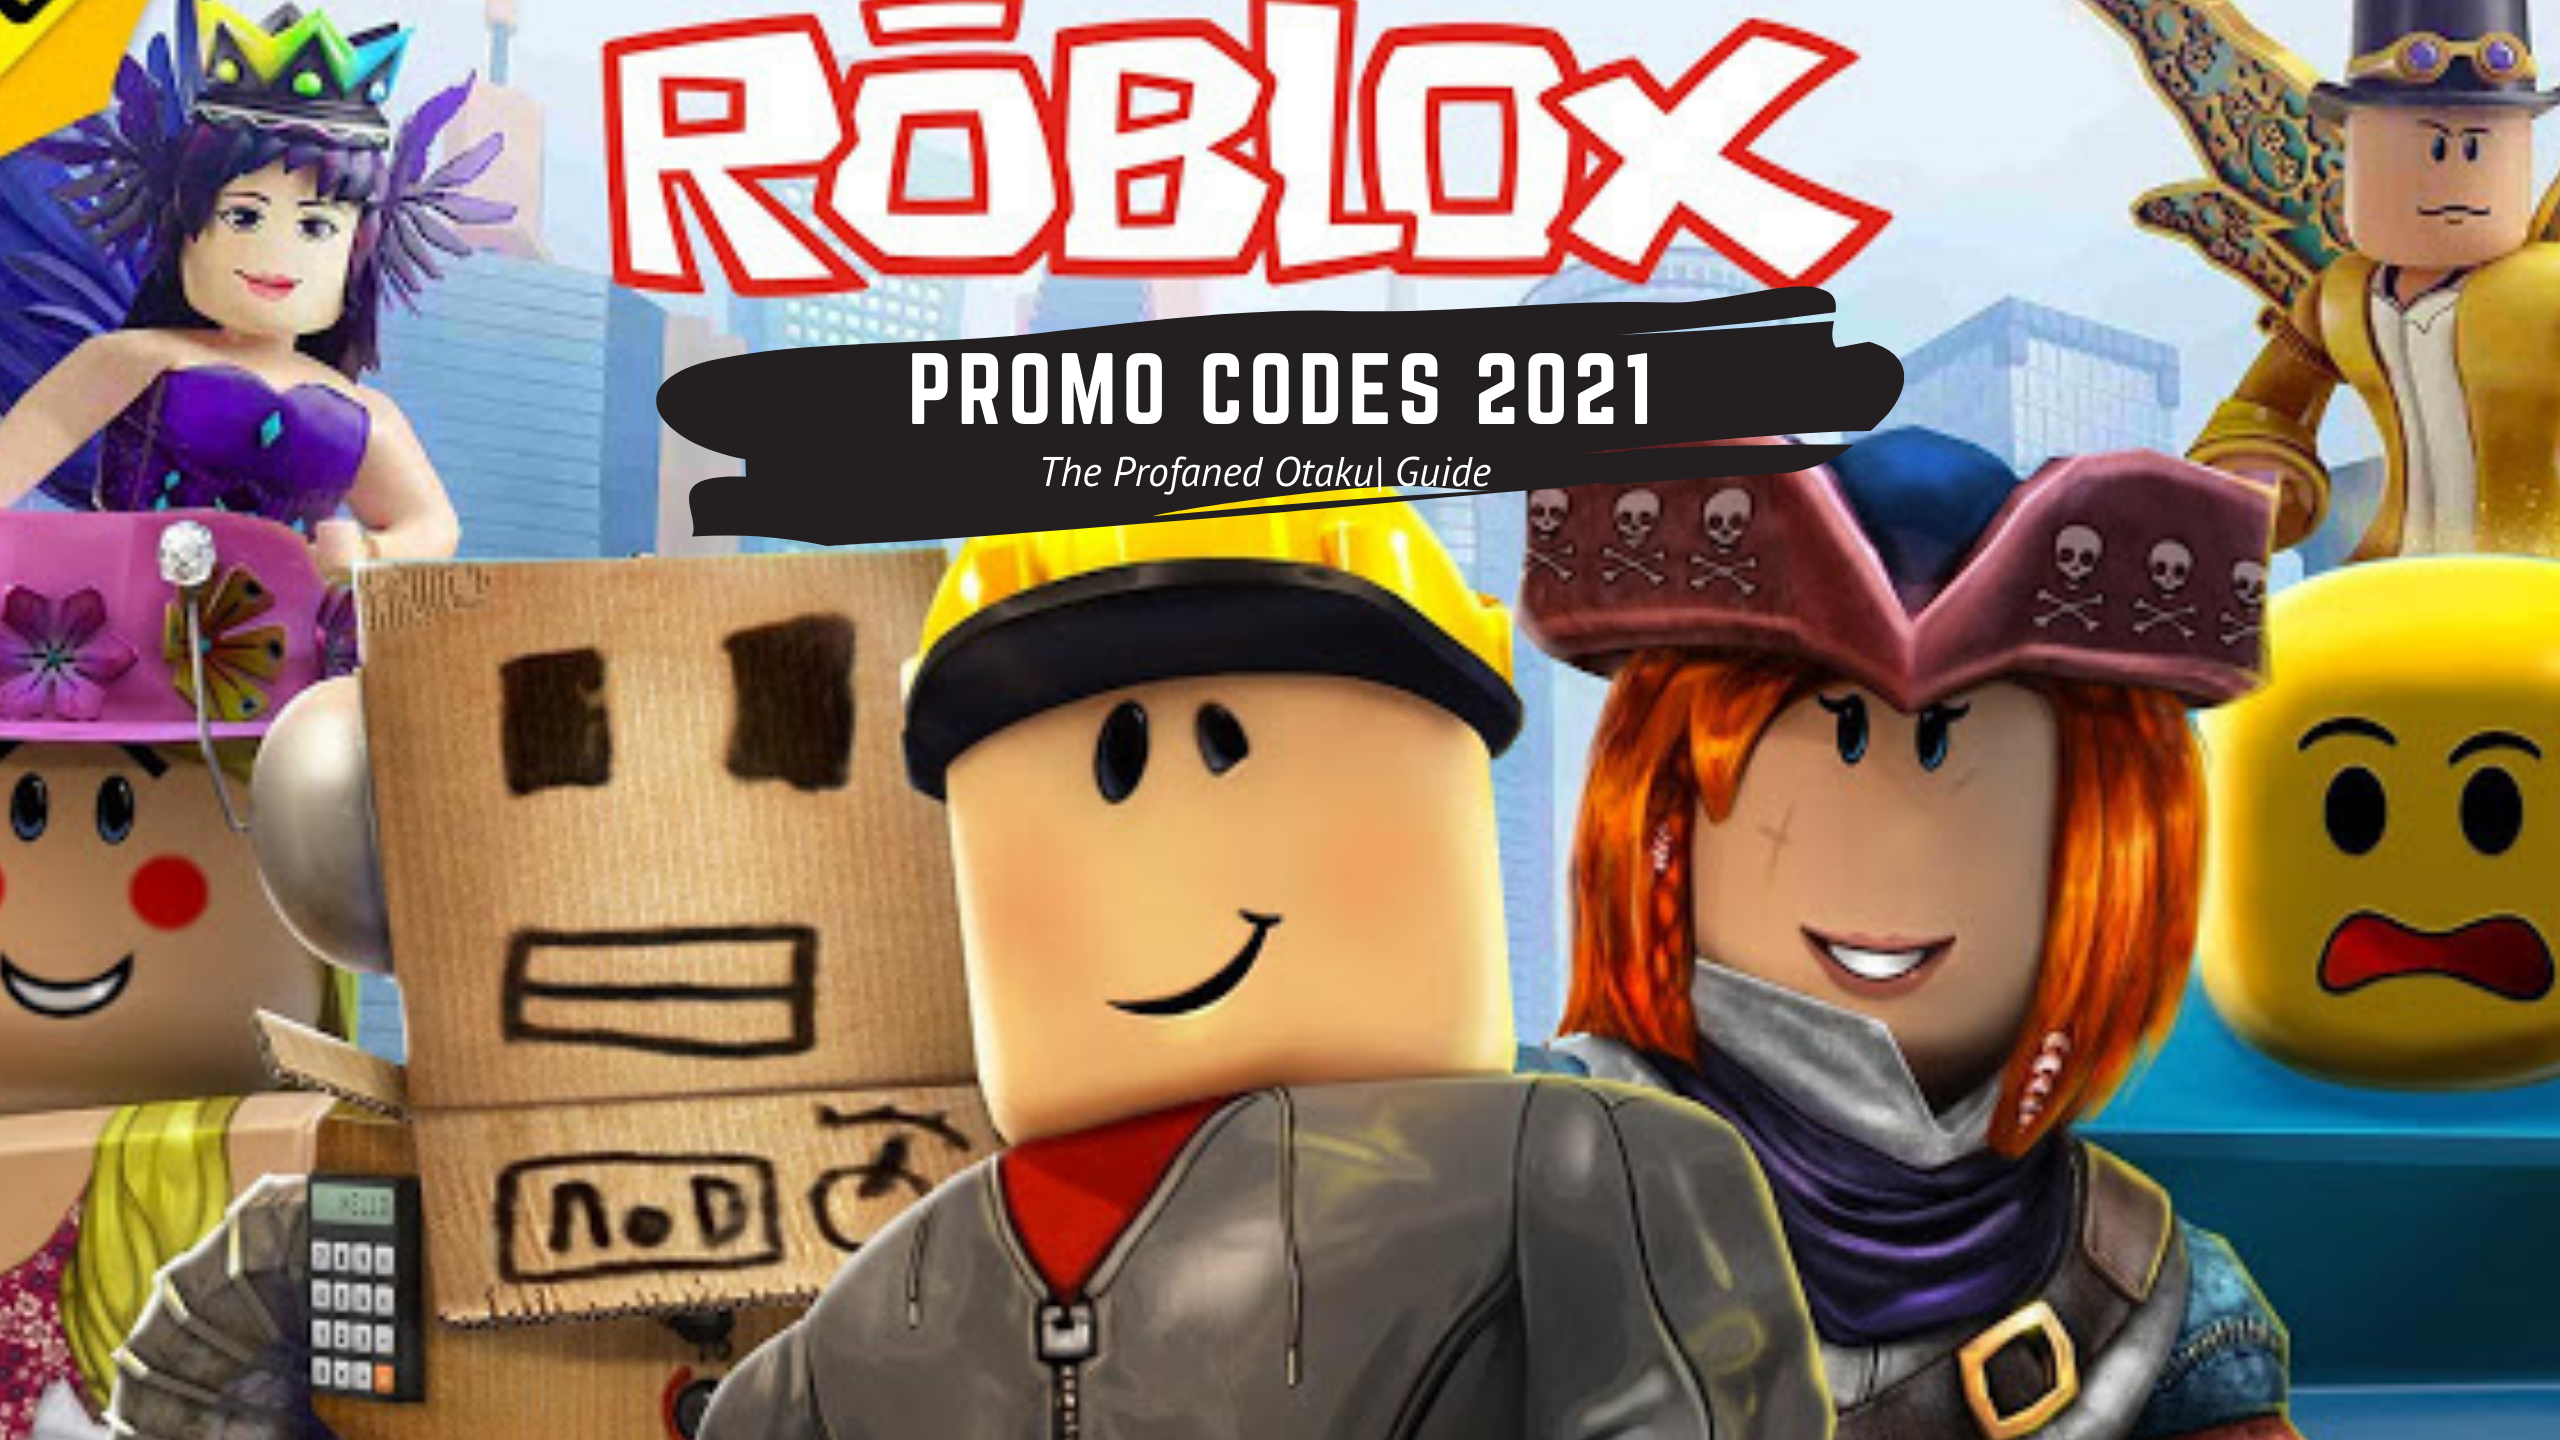 Roblox Promo Codes 2021 The Profaned Otaku - promocodes de roblox 2021